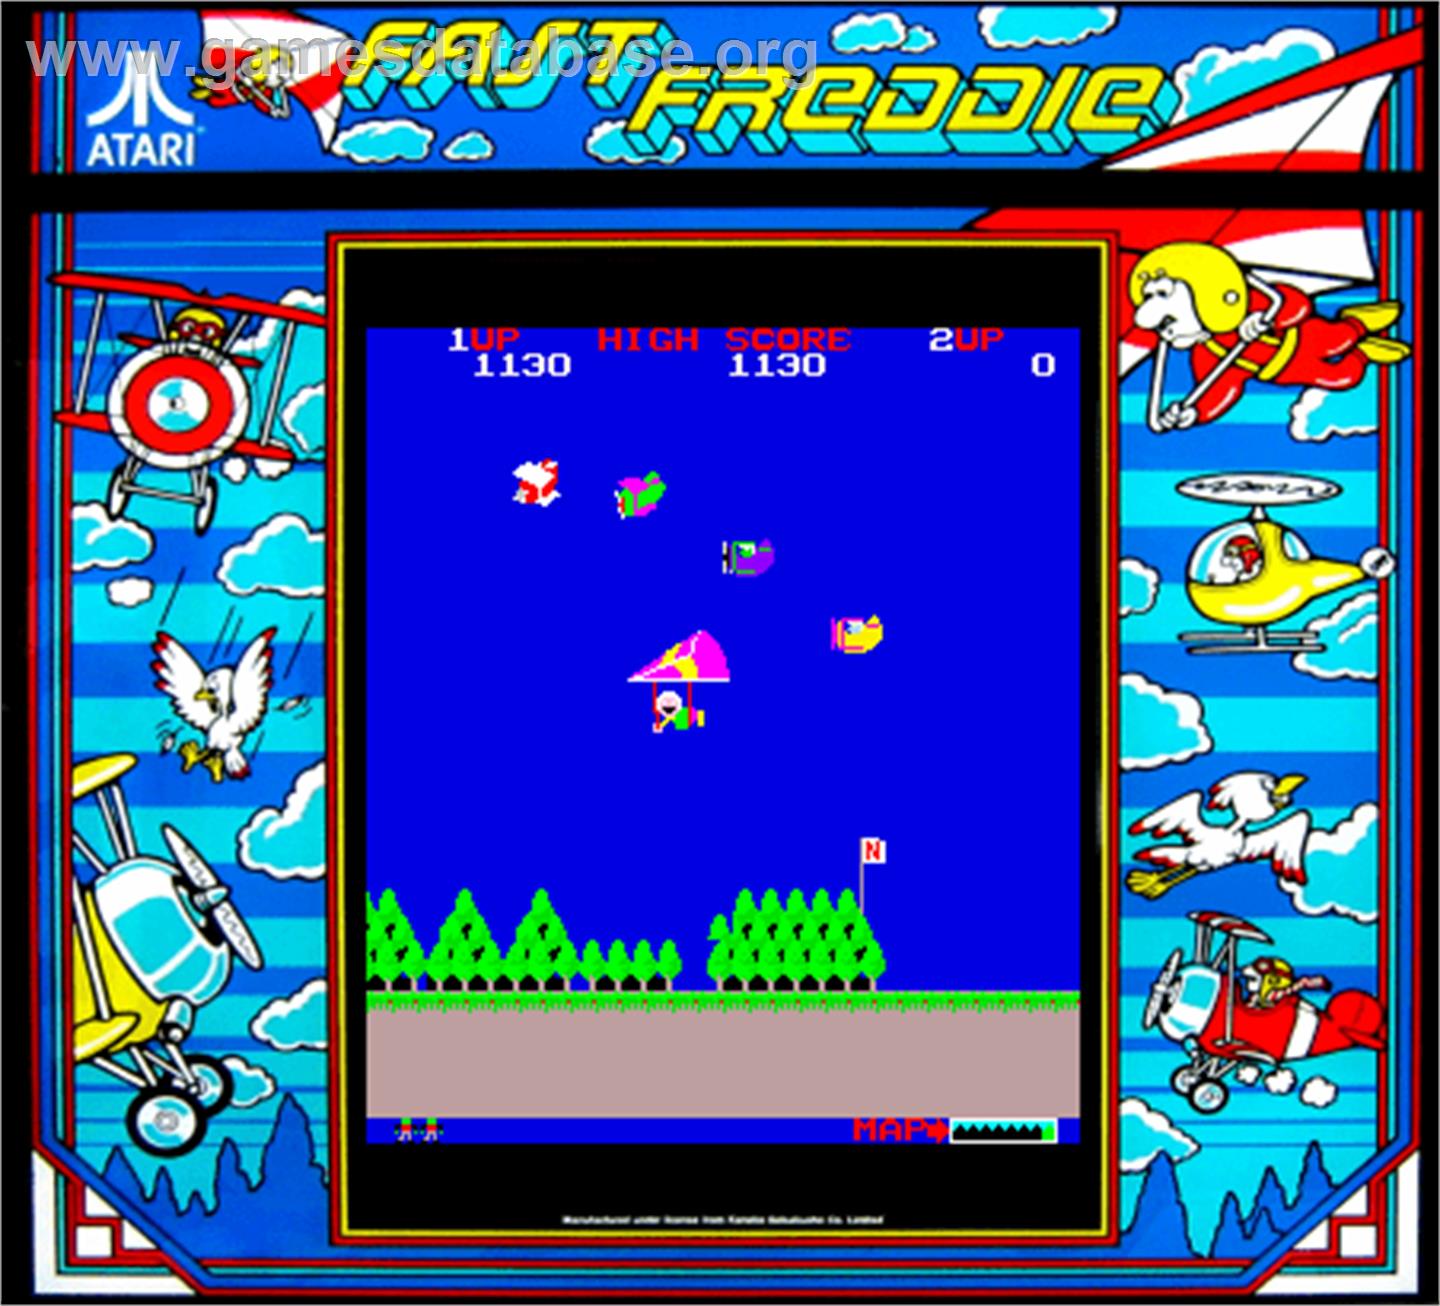 Fast Freddie - Arcade - Artwork - Artwork